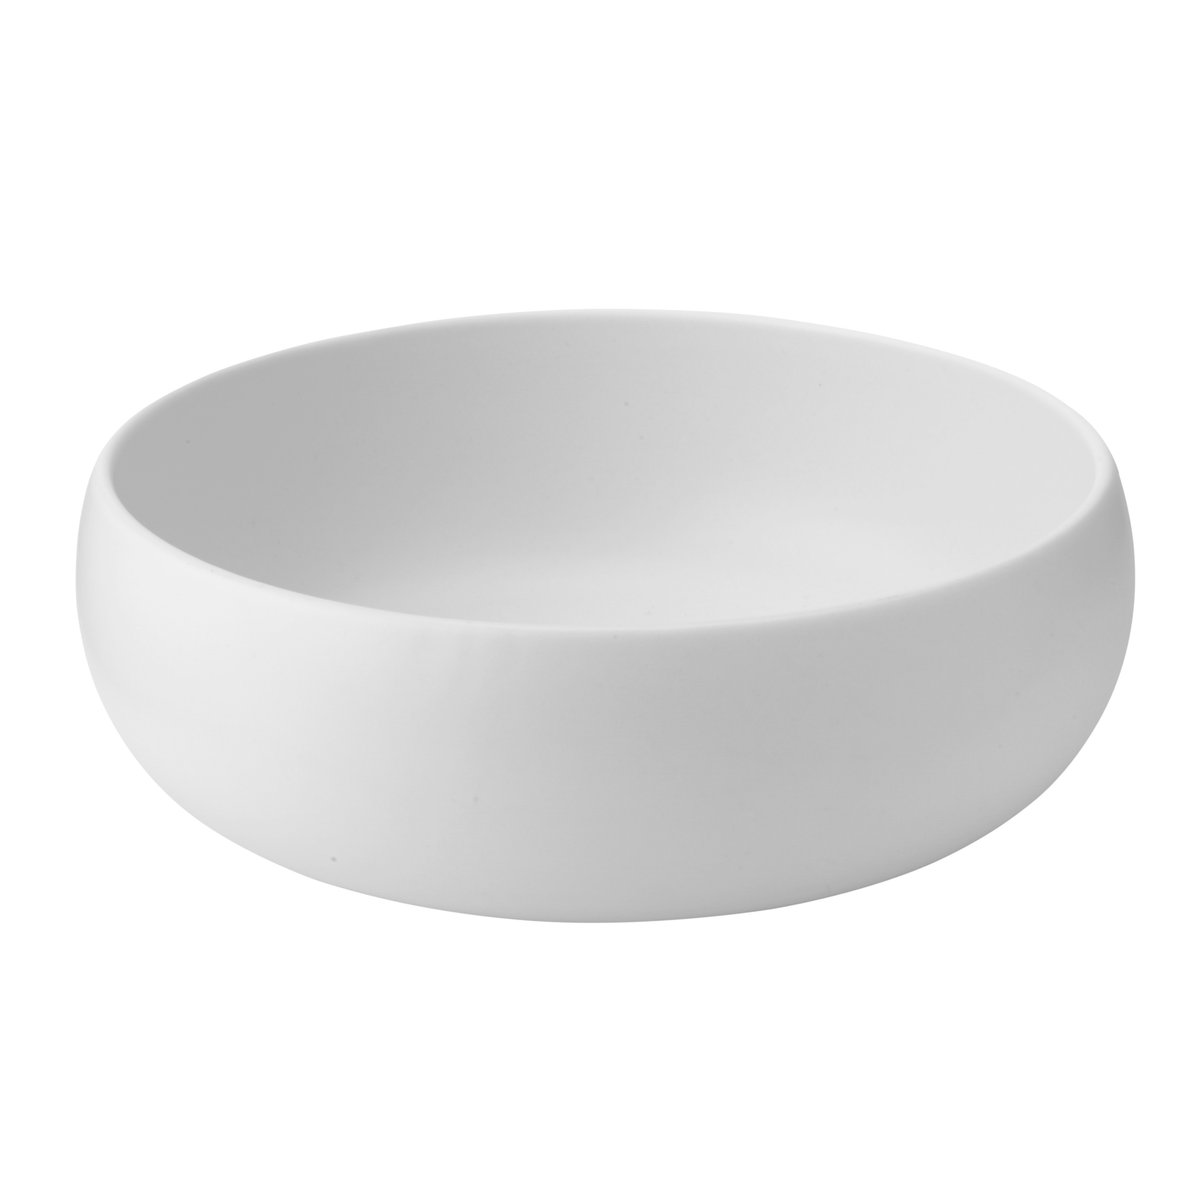 Knabstrup Keramik Earth kulho 22 cm Kalkki-valkoinen